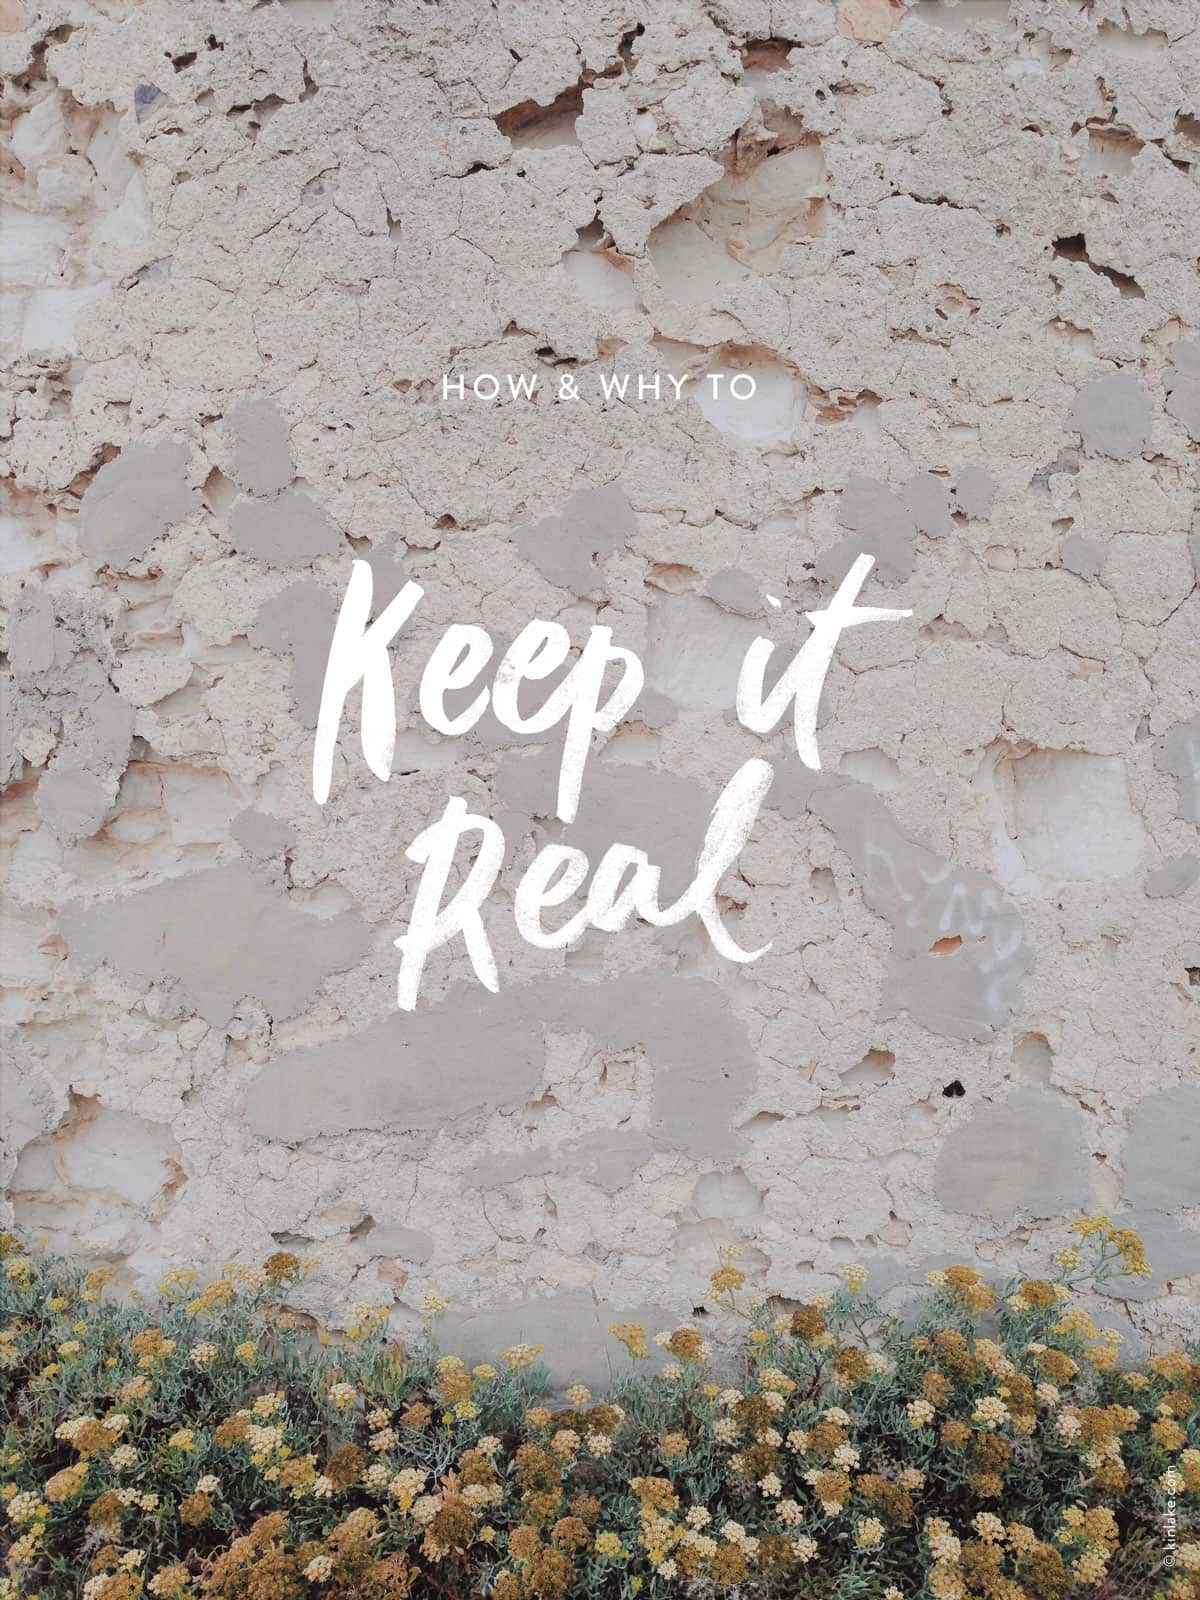 Keep-it-real-v02